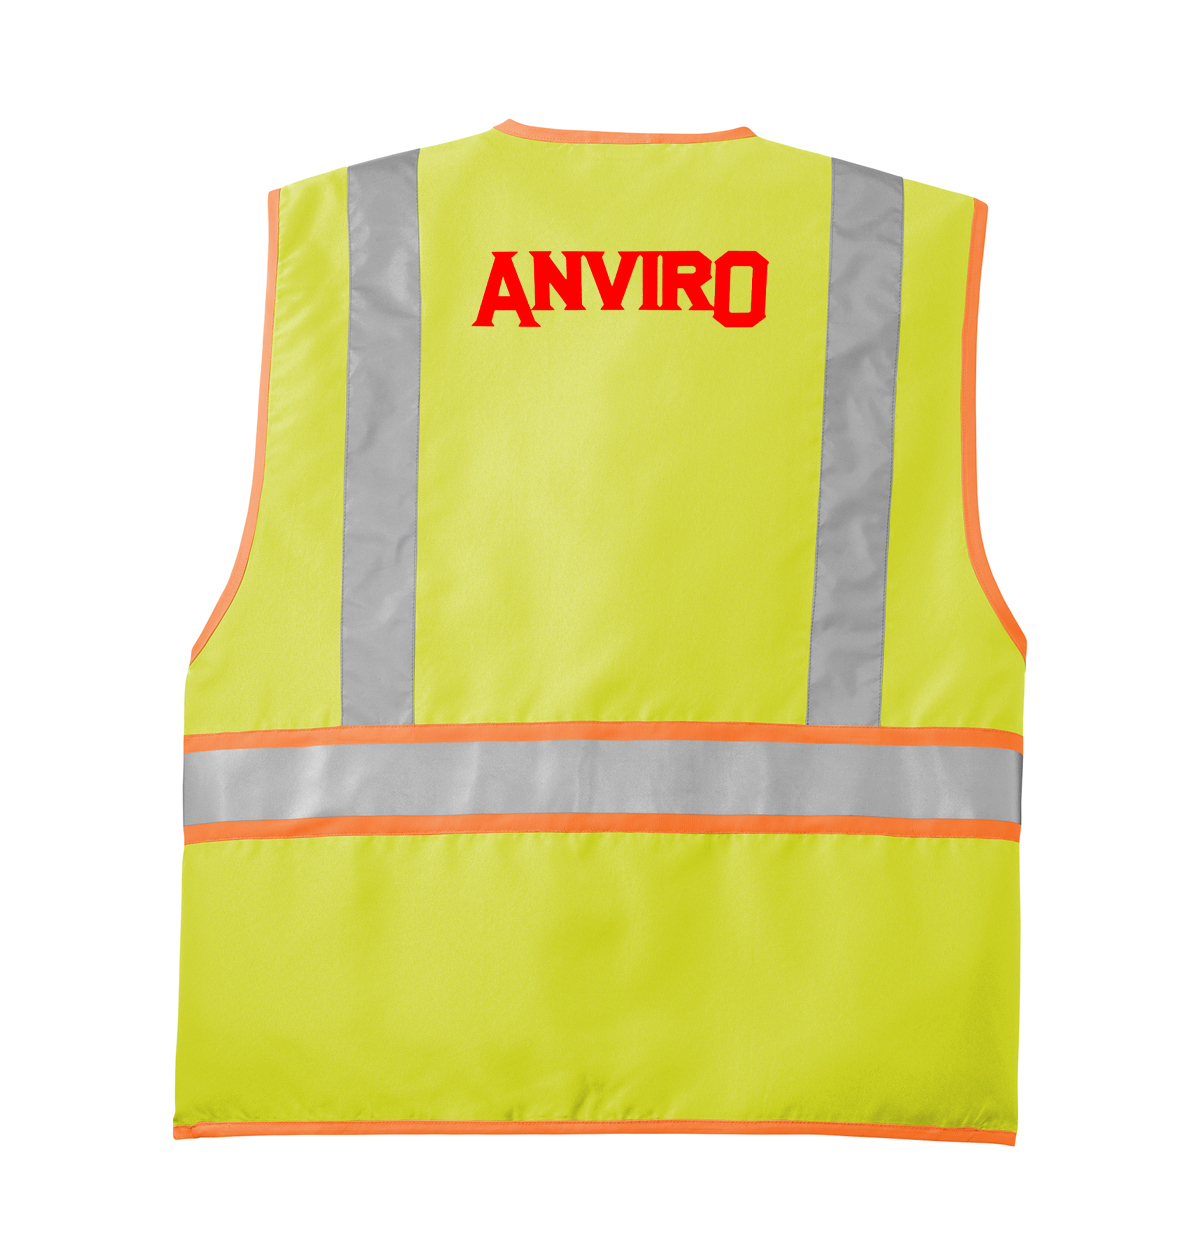 CornerStone® CSV407 ANSI 107 Class 2 Dual-Color Safety Vest